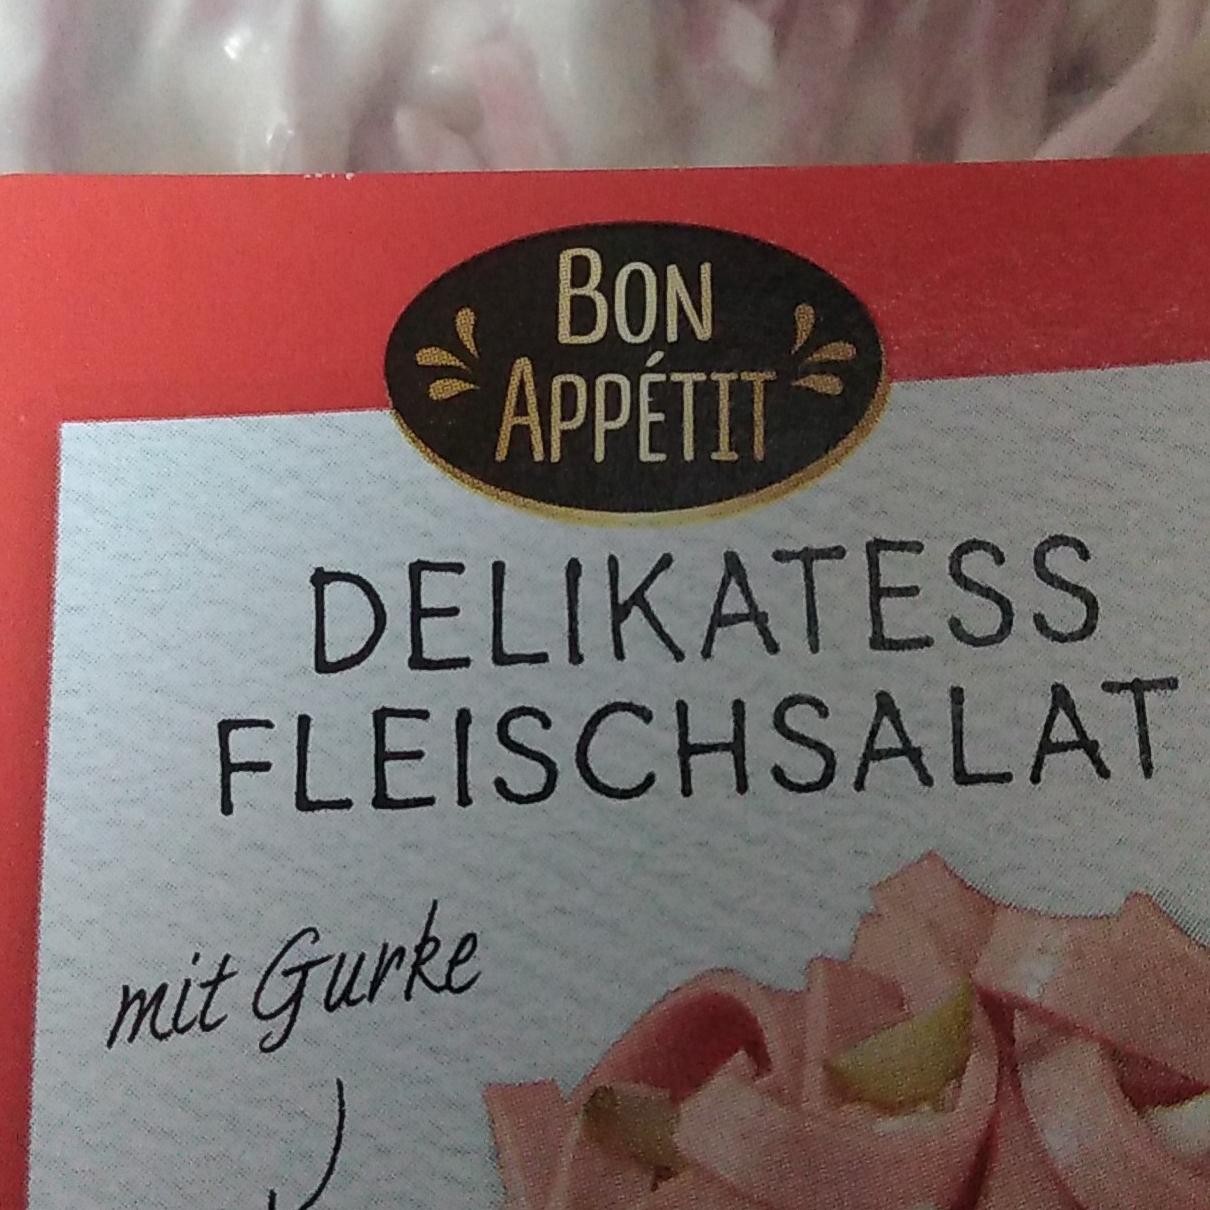 Fotografie - Delikates fleischsalat mit gurke Bon appétit